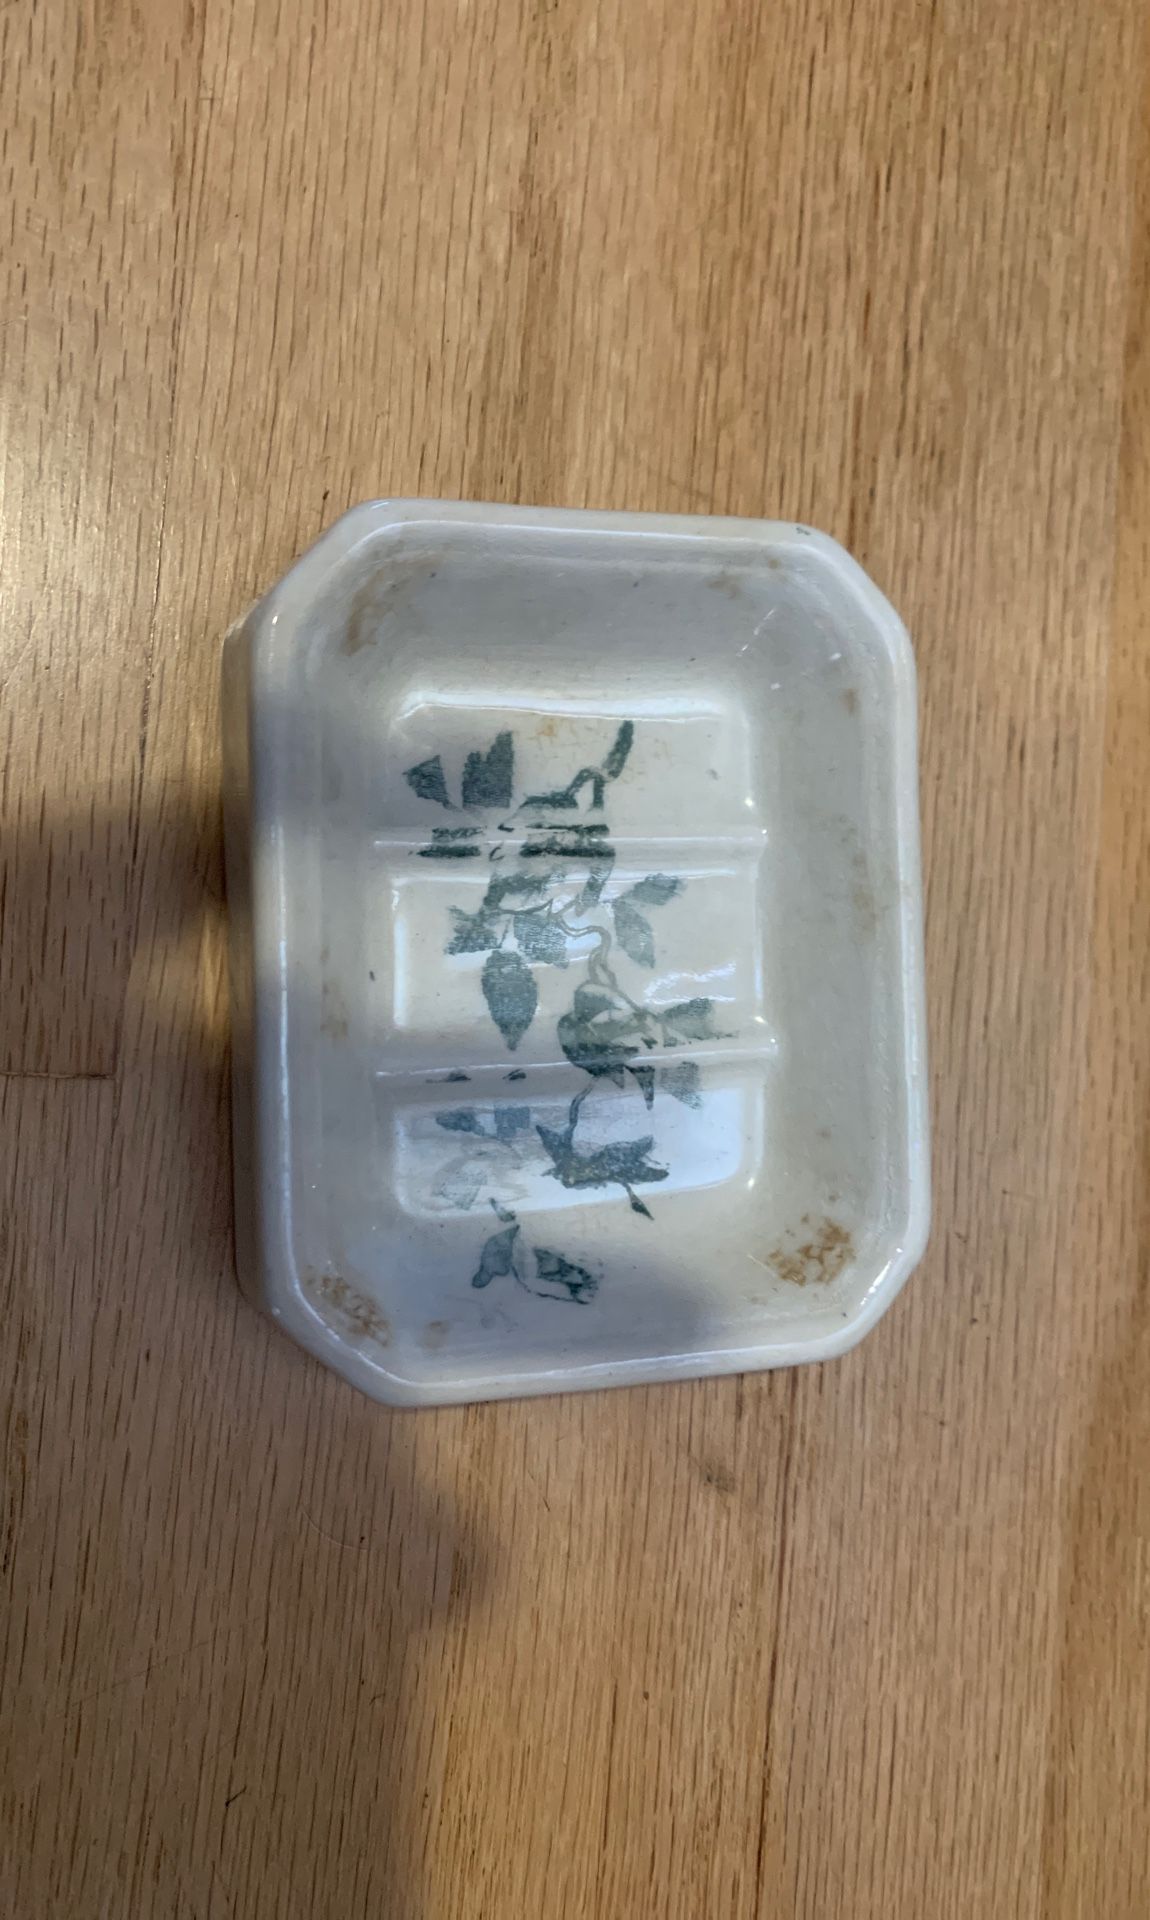 Antique china soap dish (matches chamber pot & pitcher)